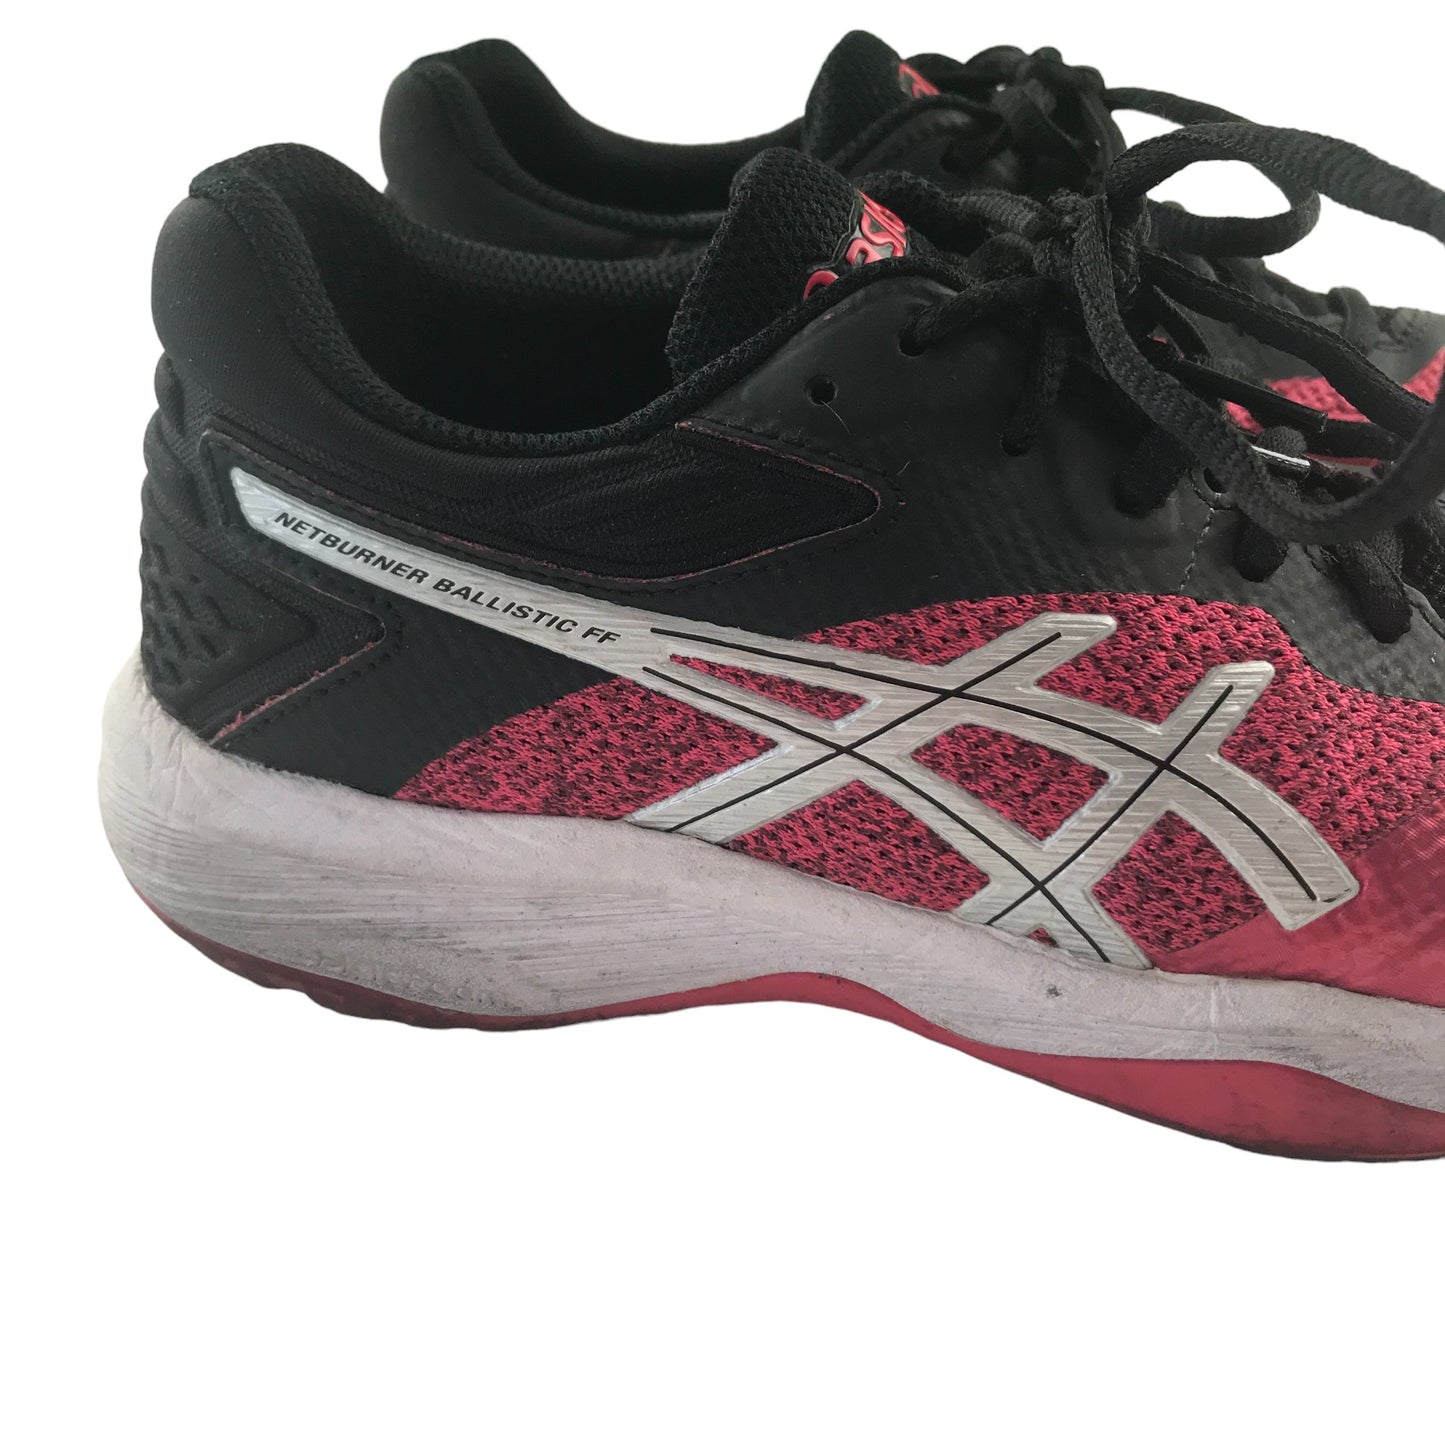 Asics Gel Netburner Ballistic Trainers Shoe Size 7 Shiny Pink and Black